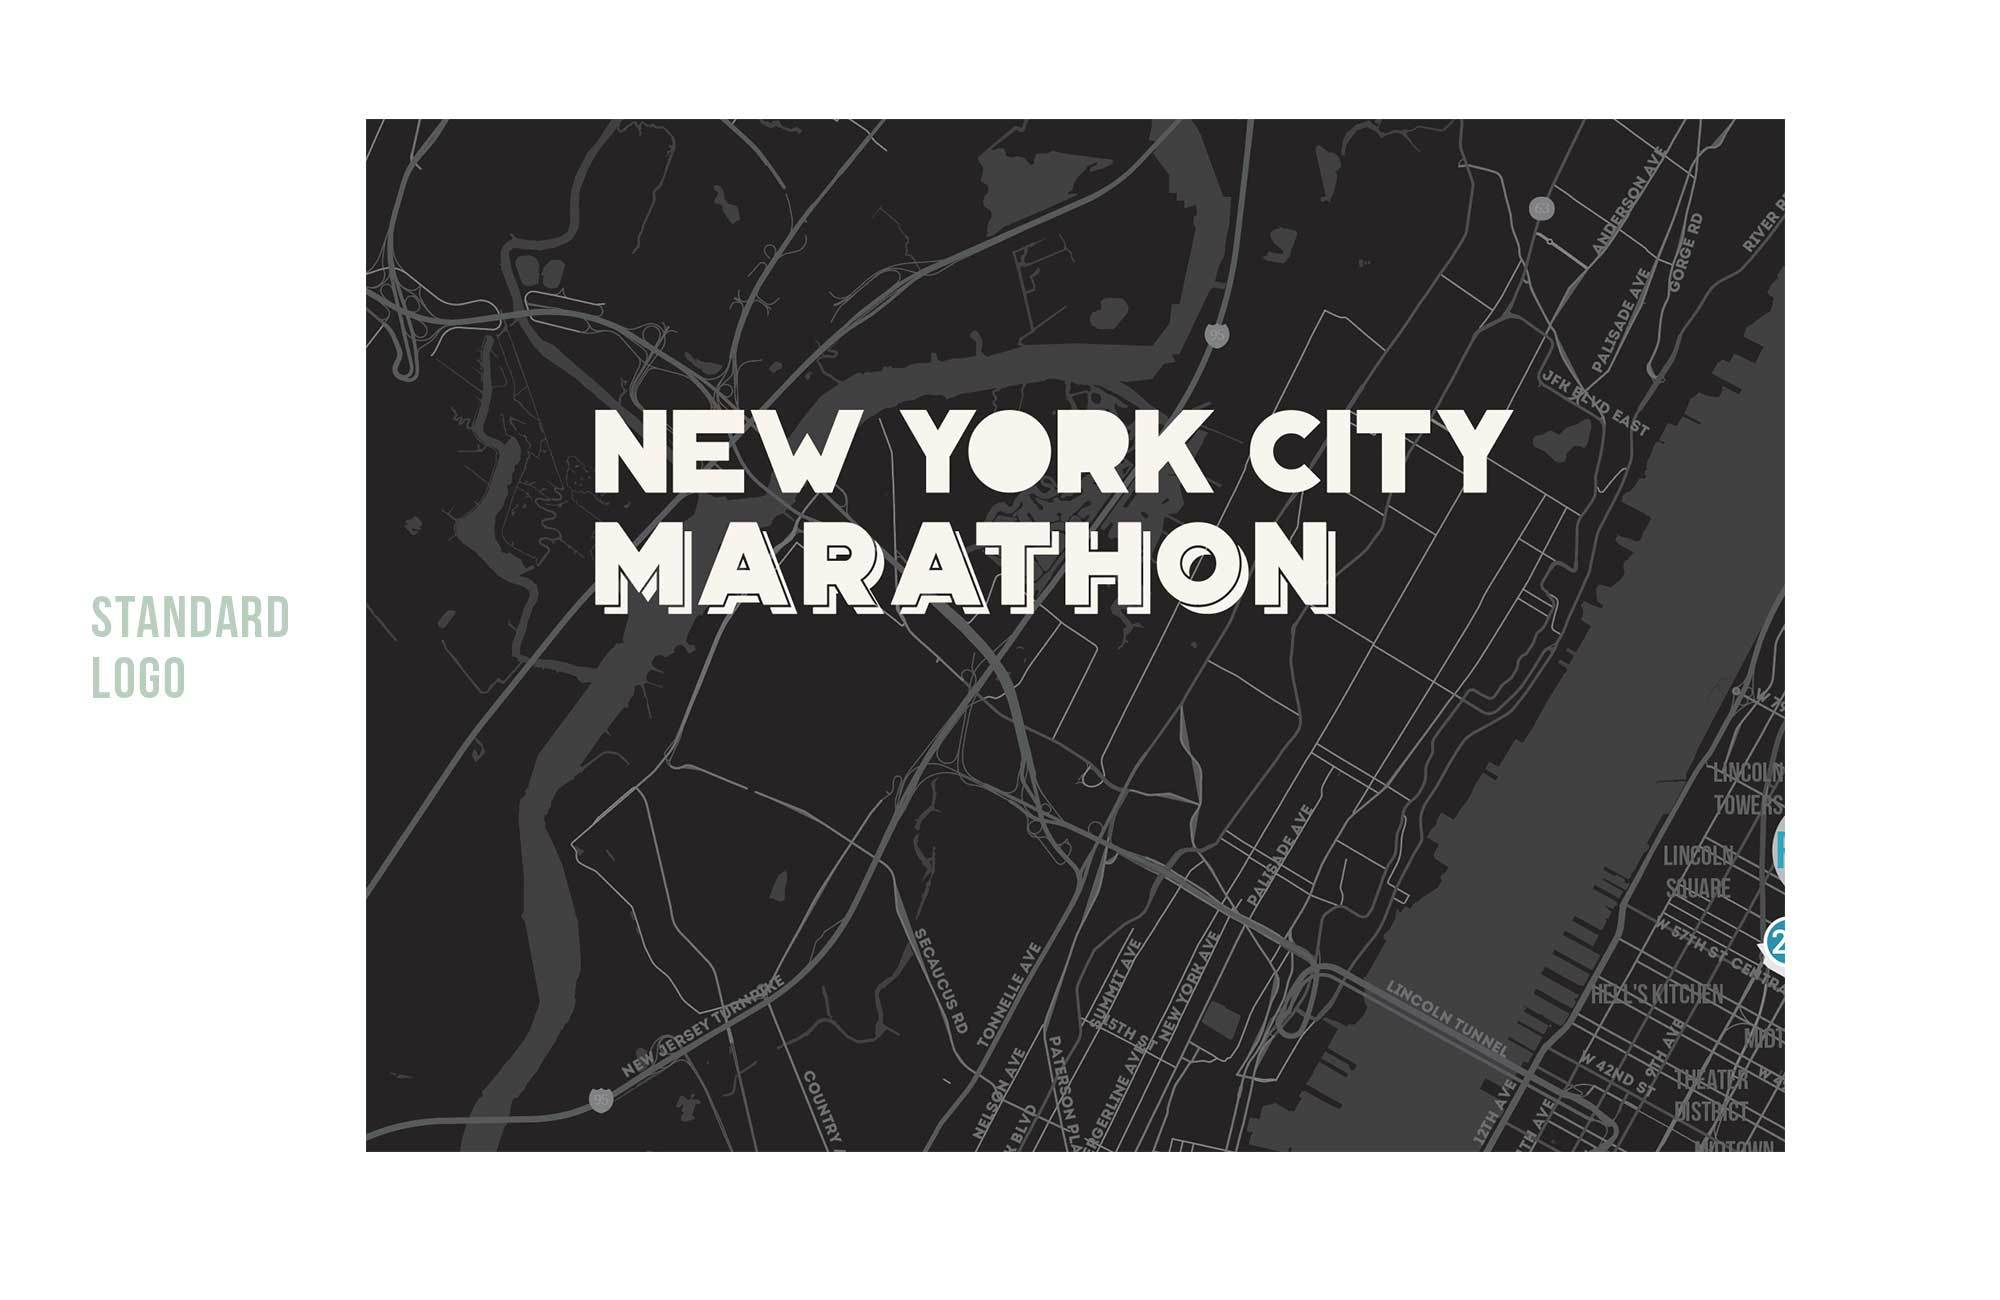 New York Marathon Map Canvas, Many Sizes Map World Vibe Studio 